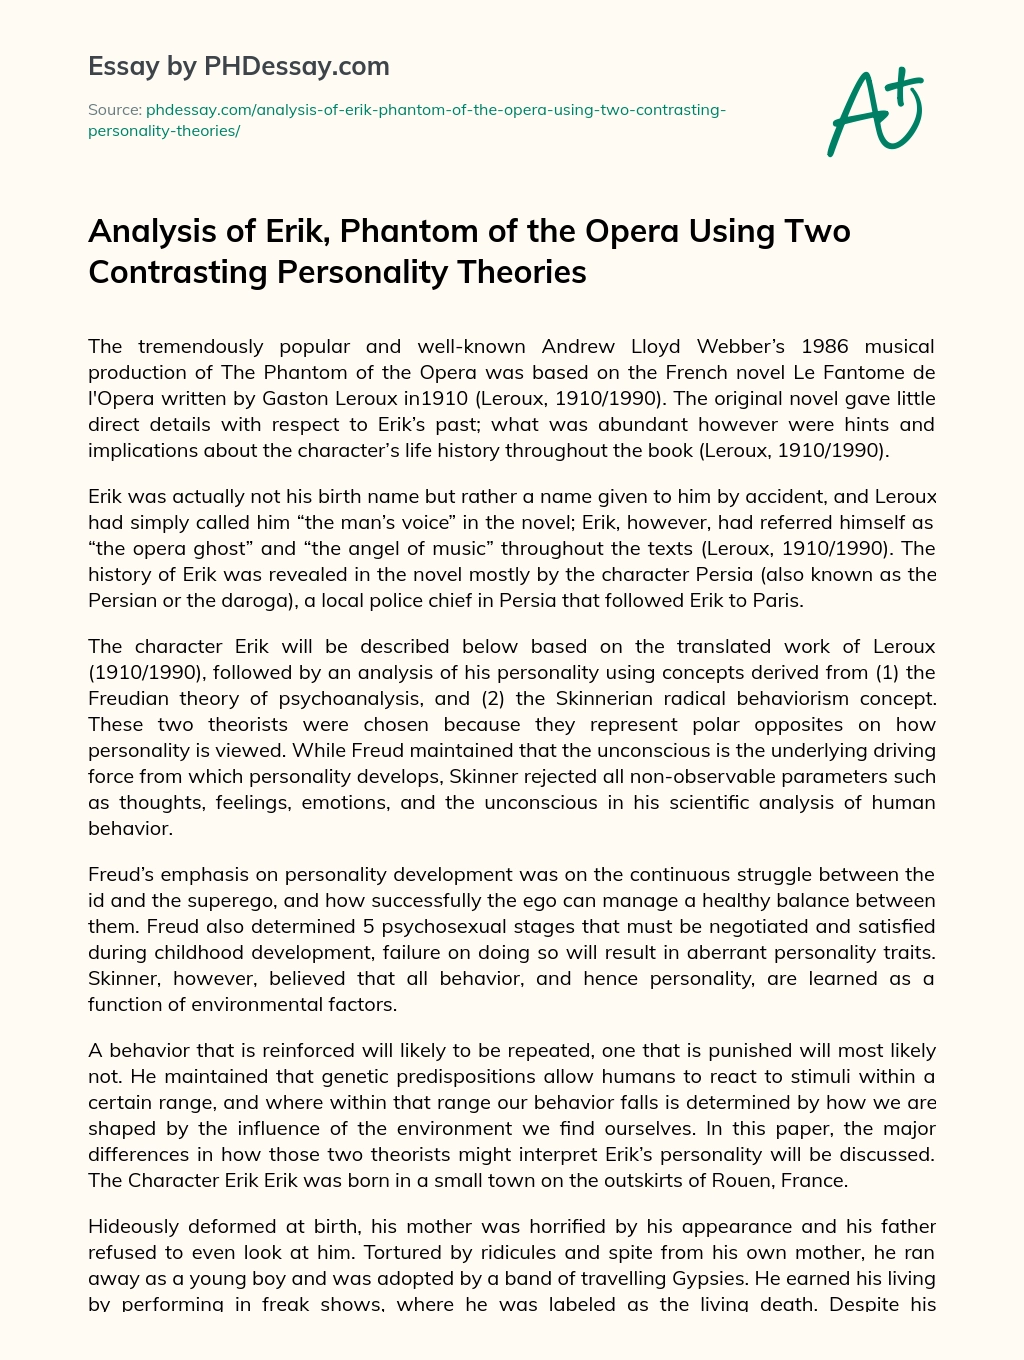 Analysis of Erik, Phantom of the Opera Using Two Contrasting Personality Theories essay